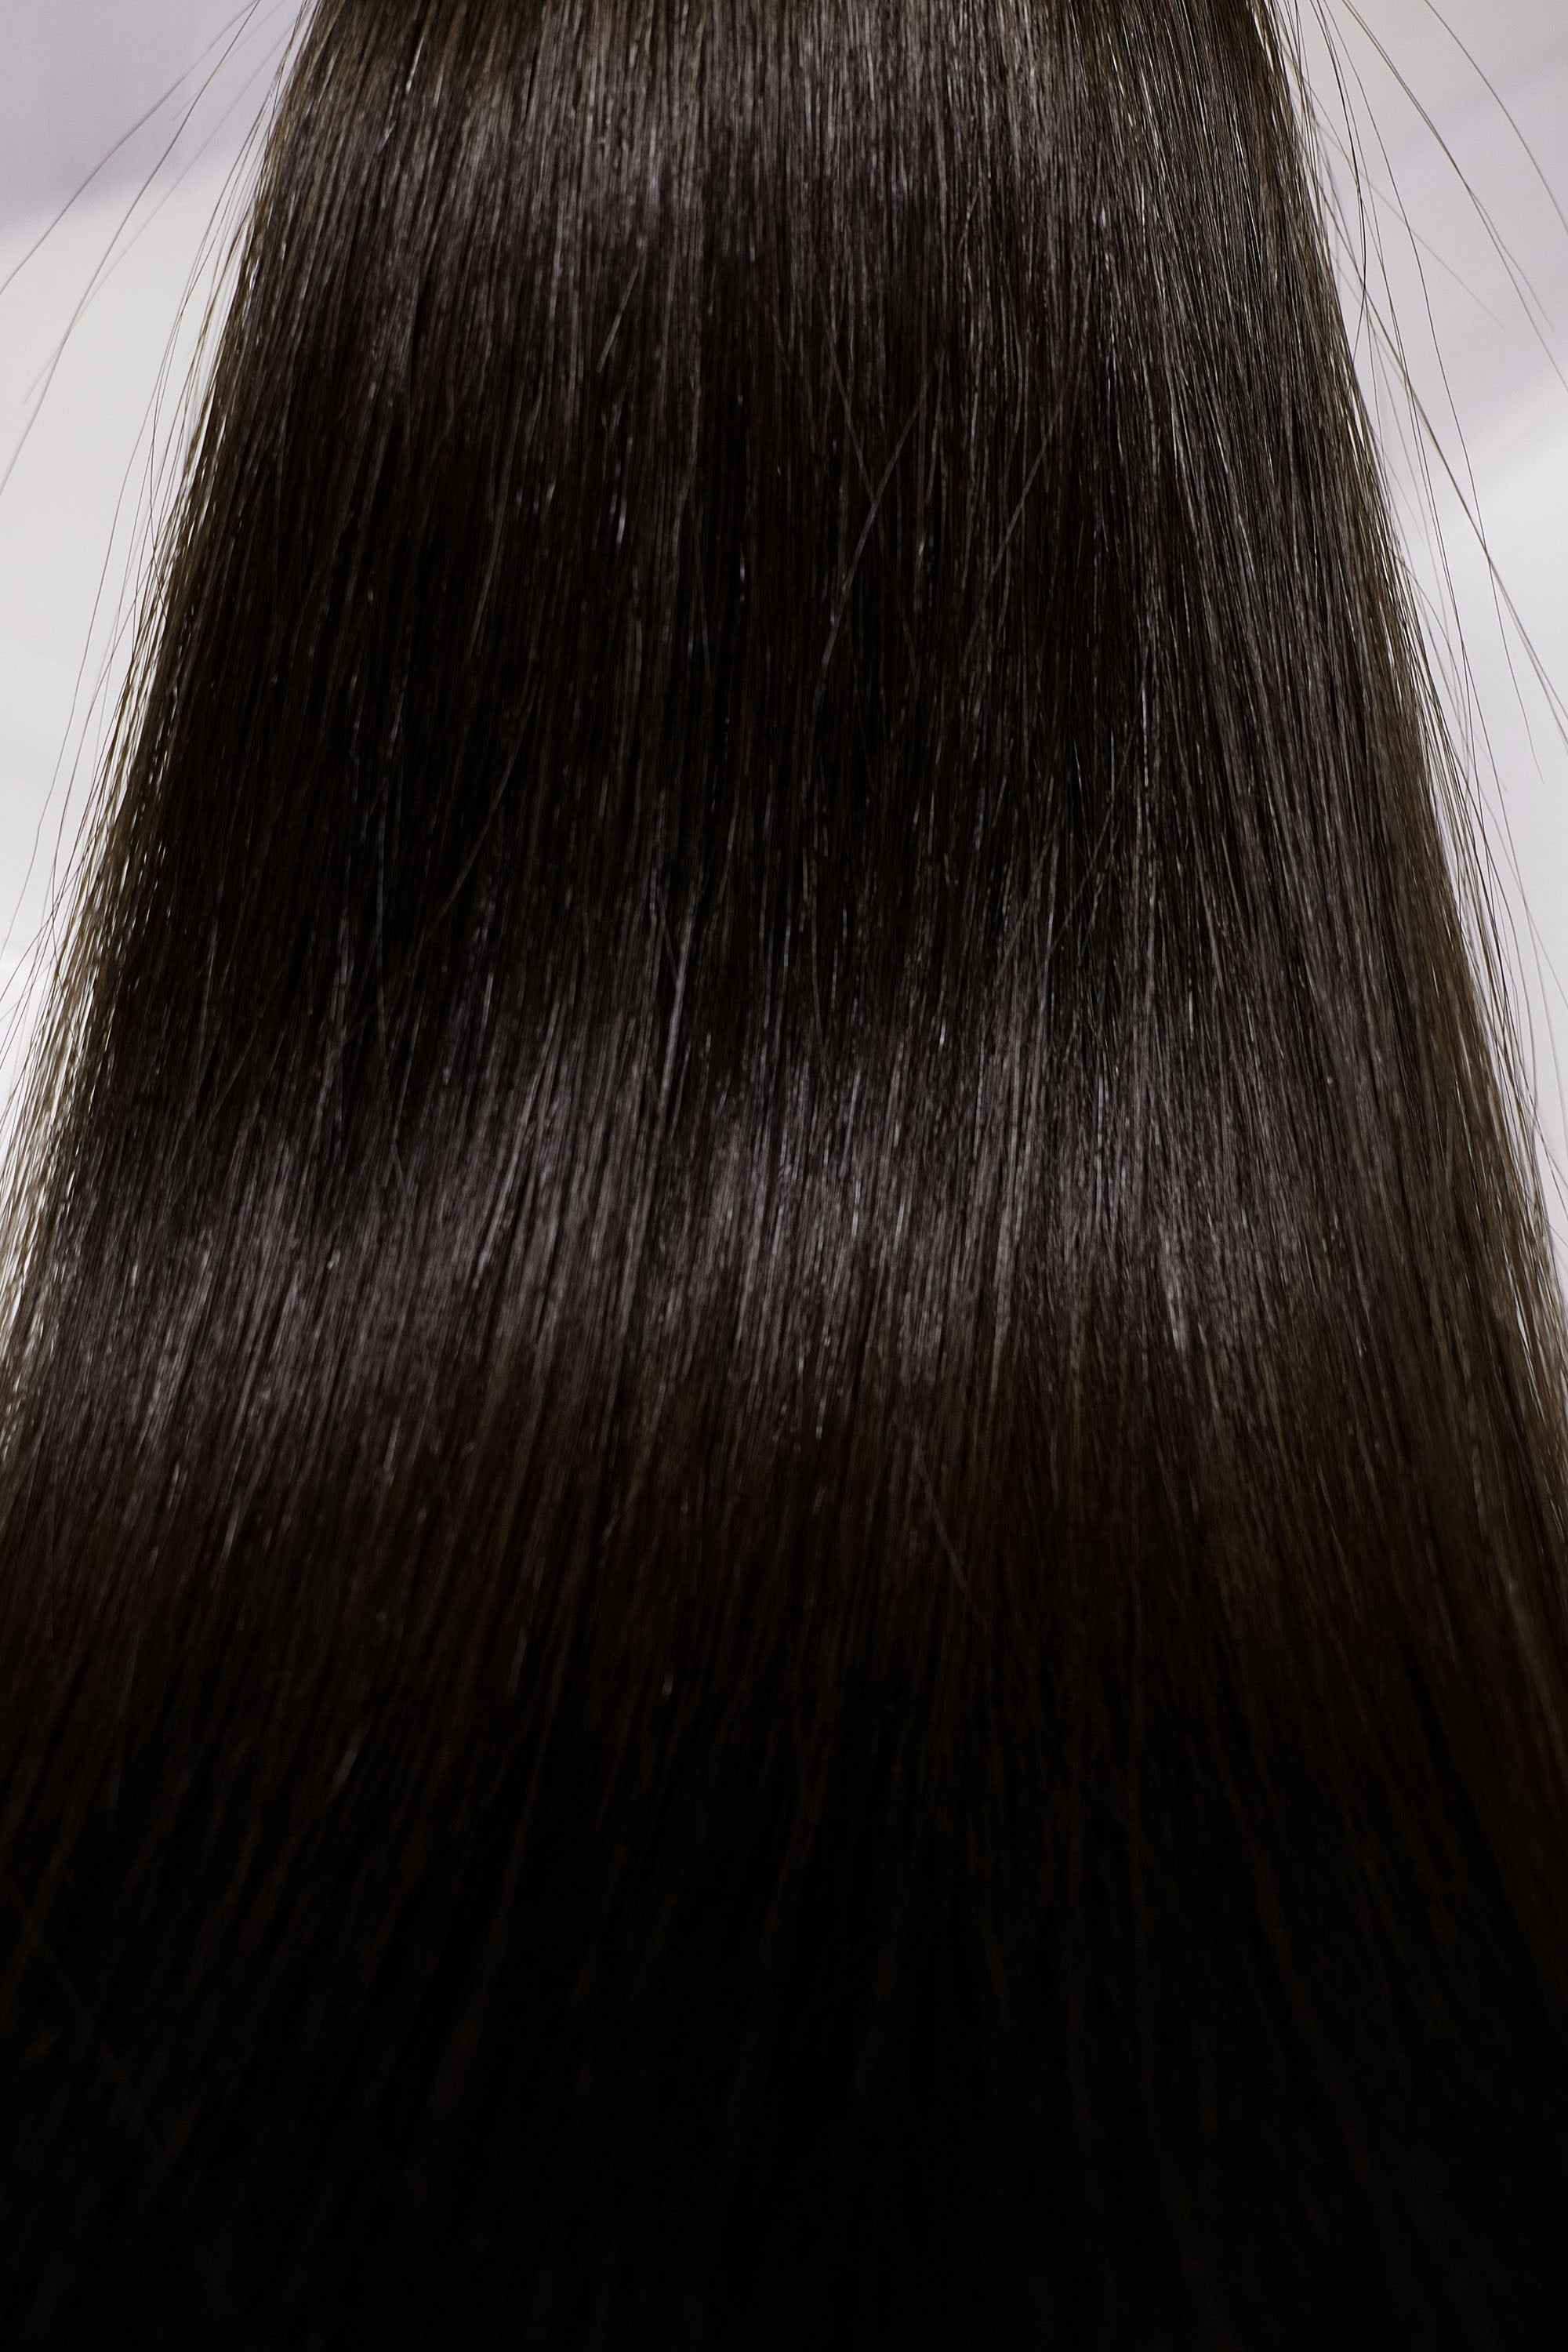 Behair professional Keratin Tip "Premium" 24" (60cm) Natural Straight Natural Black #1B - 25g (Micro - 0.5g each pcs) hair extensions